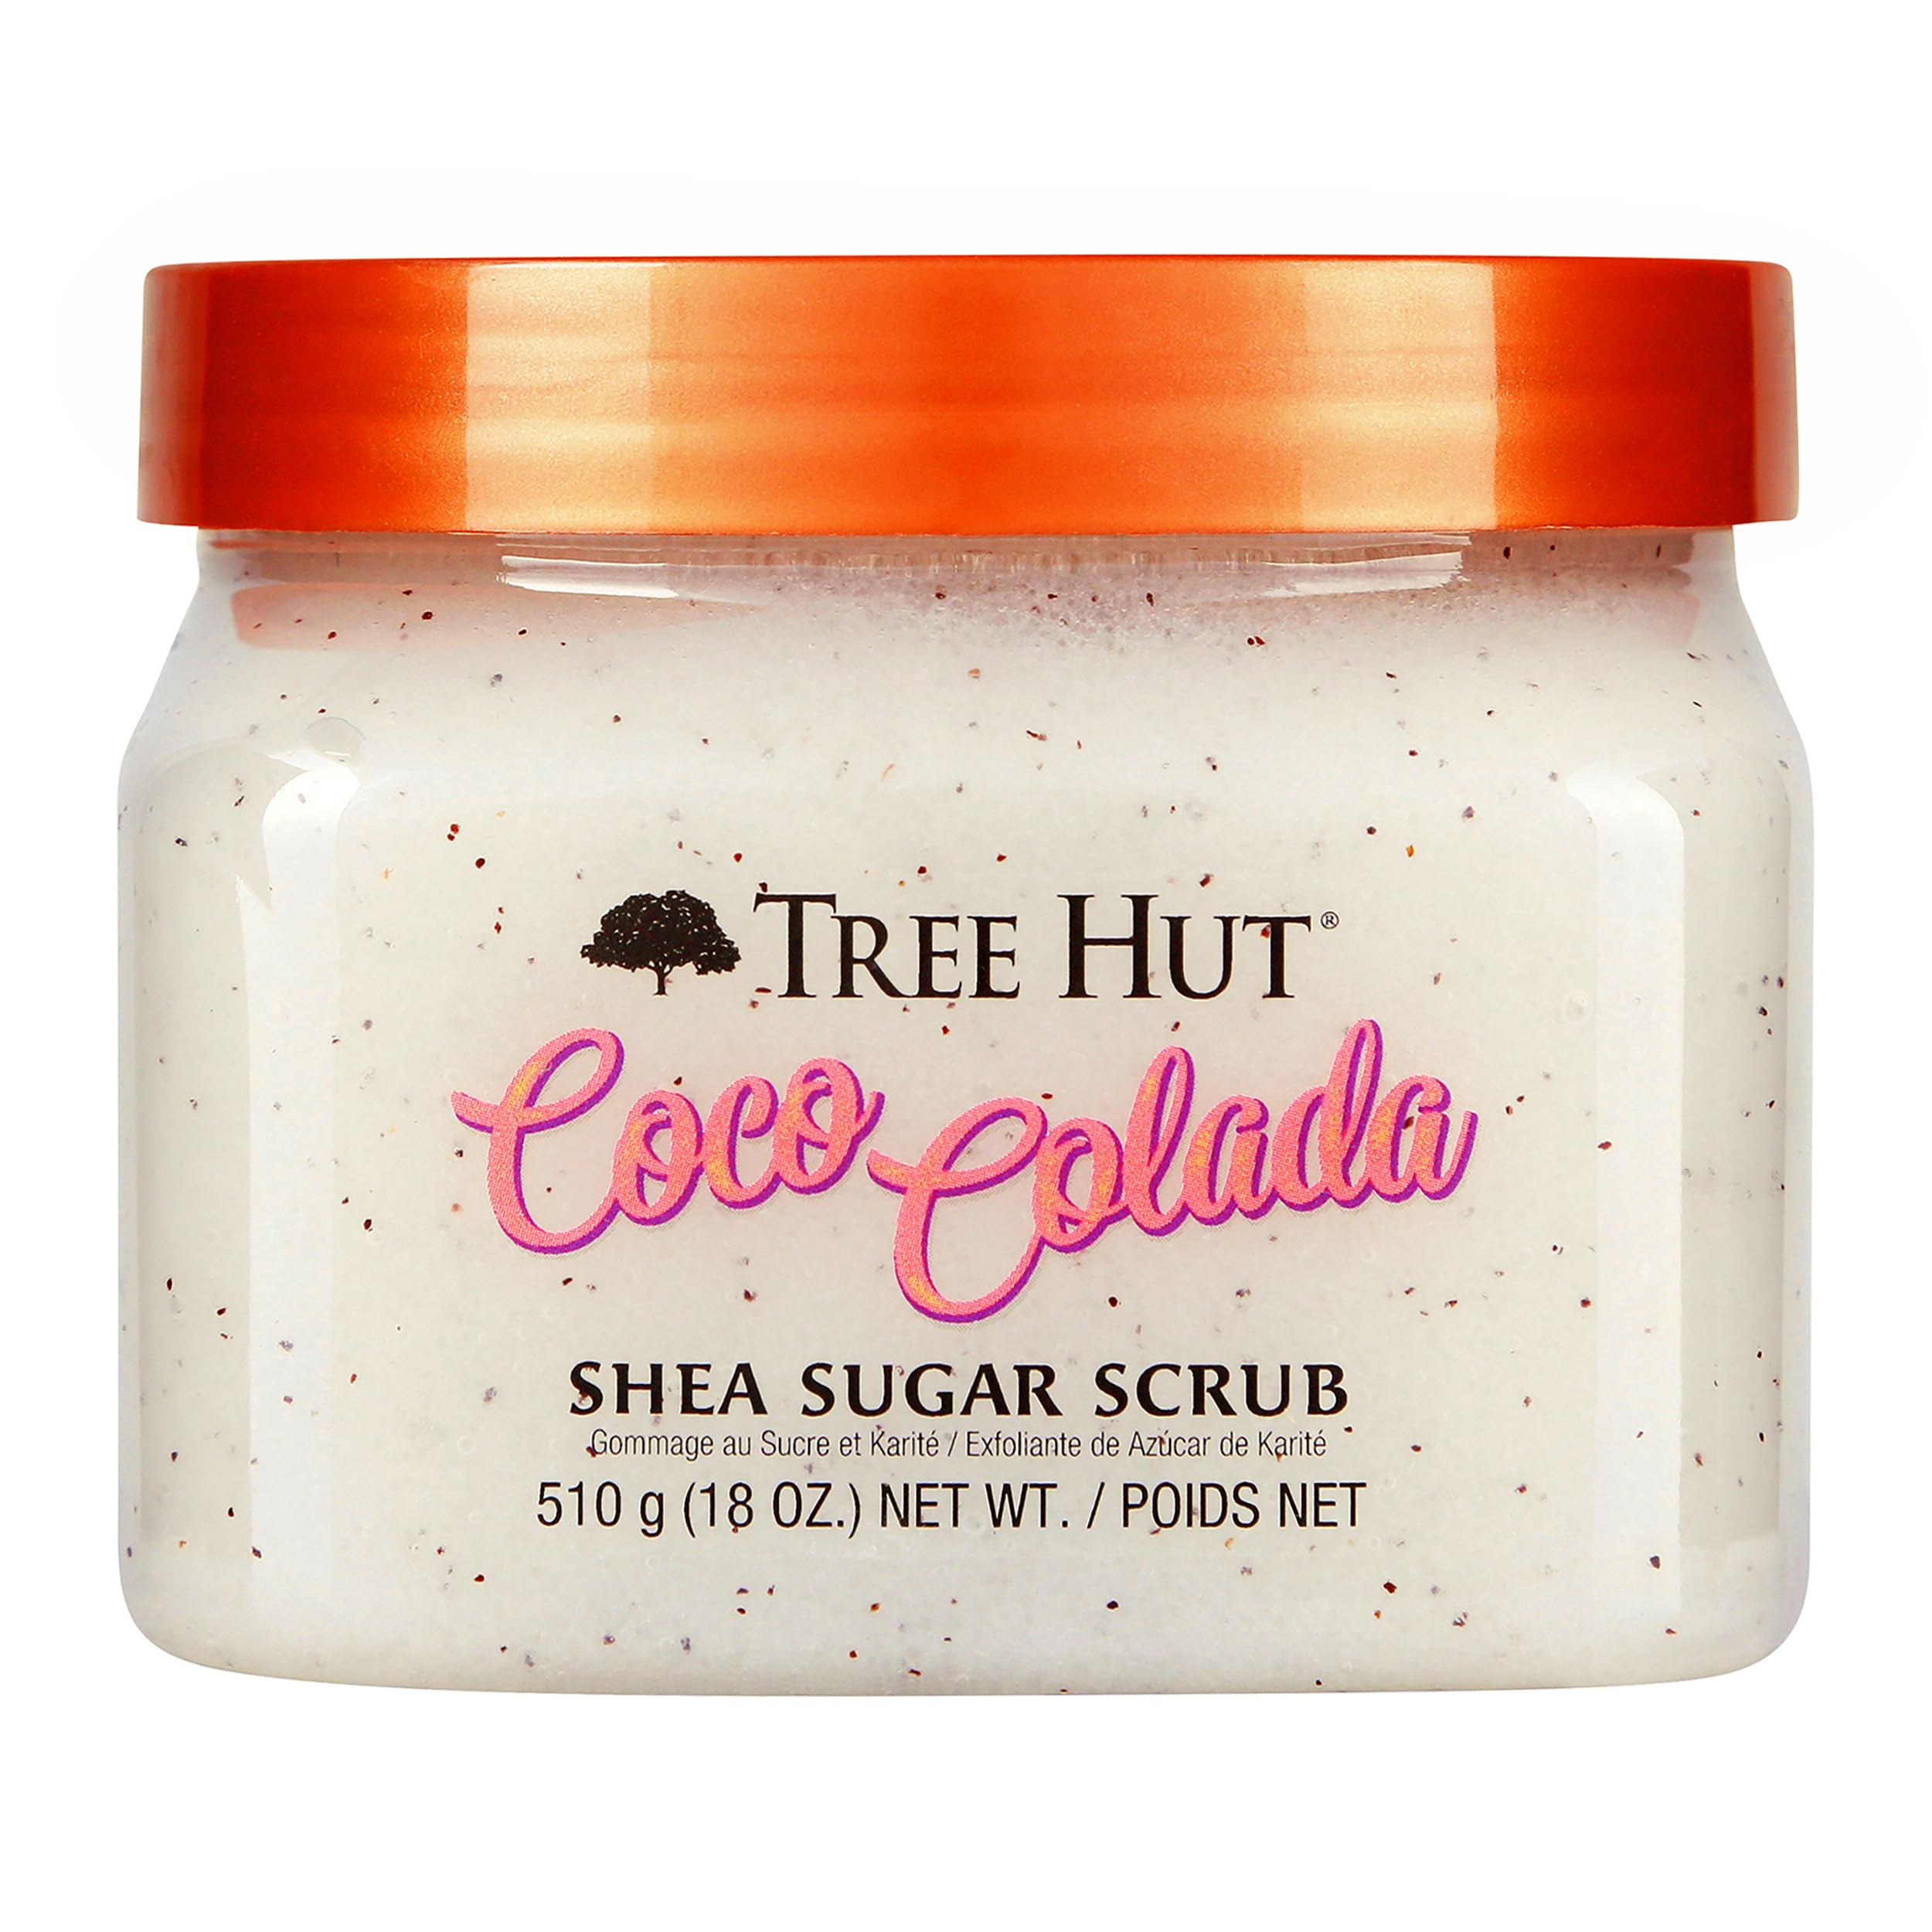 18-Oz Tree Hut Shea Sugar Scrub (Coco Colada) $5.69 w/ S&S + Free Shipping w/ Prime or on $35+